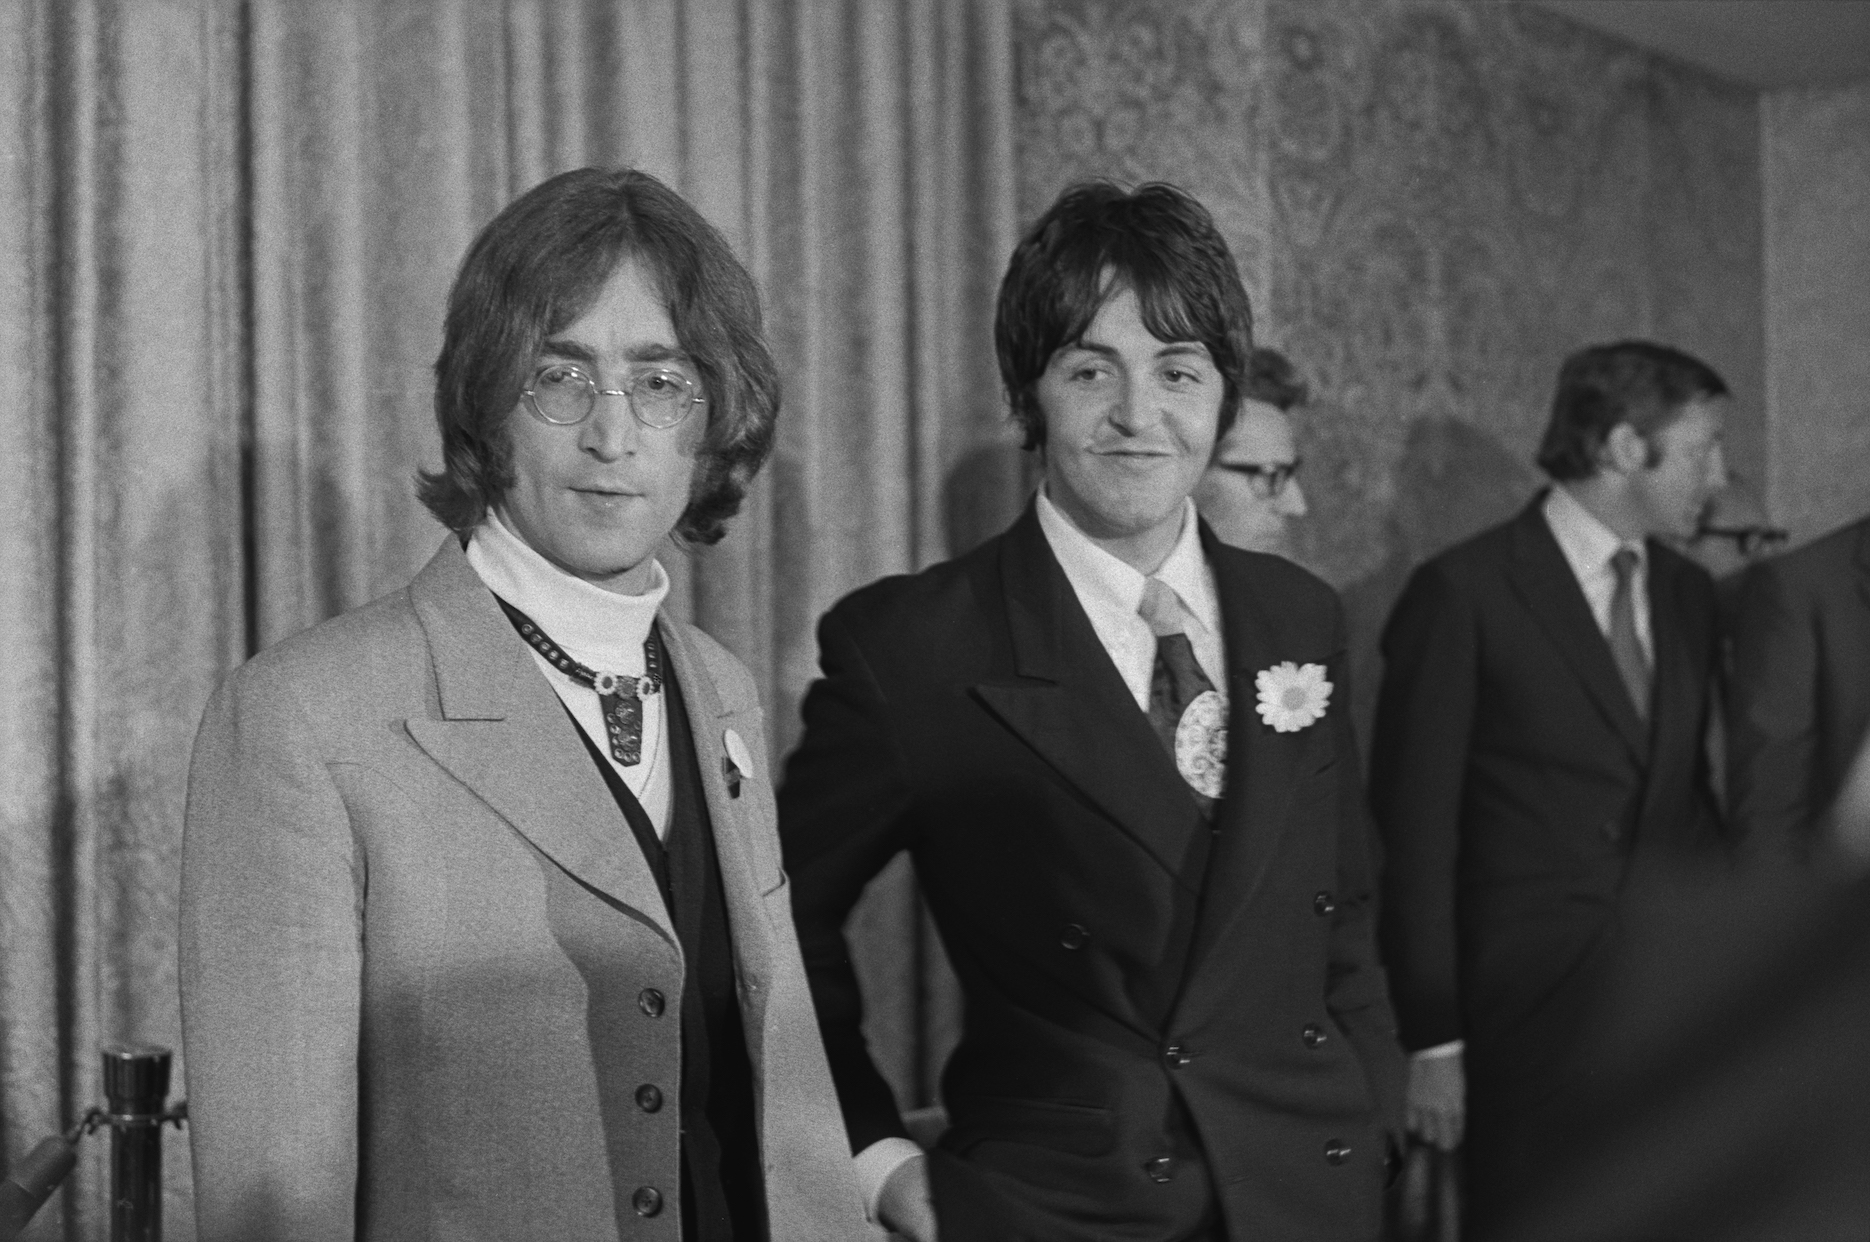 Woman': comparing both Paul McCartney and John Lennon songs